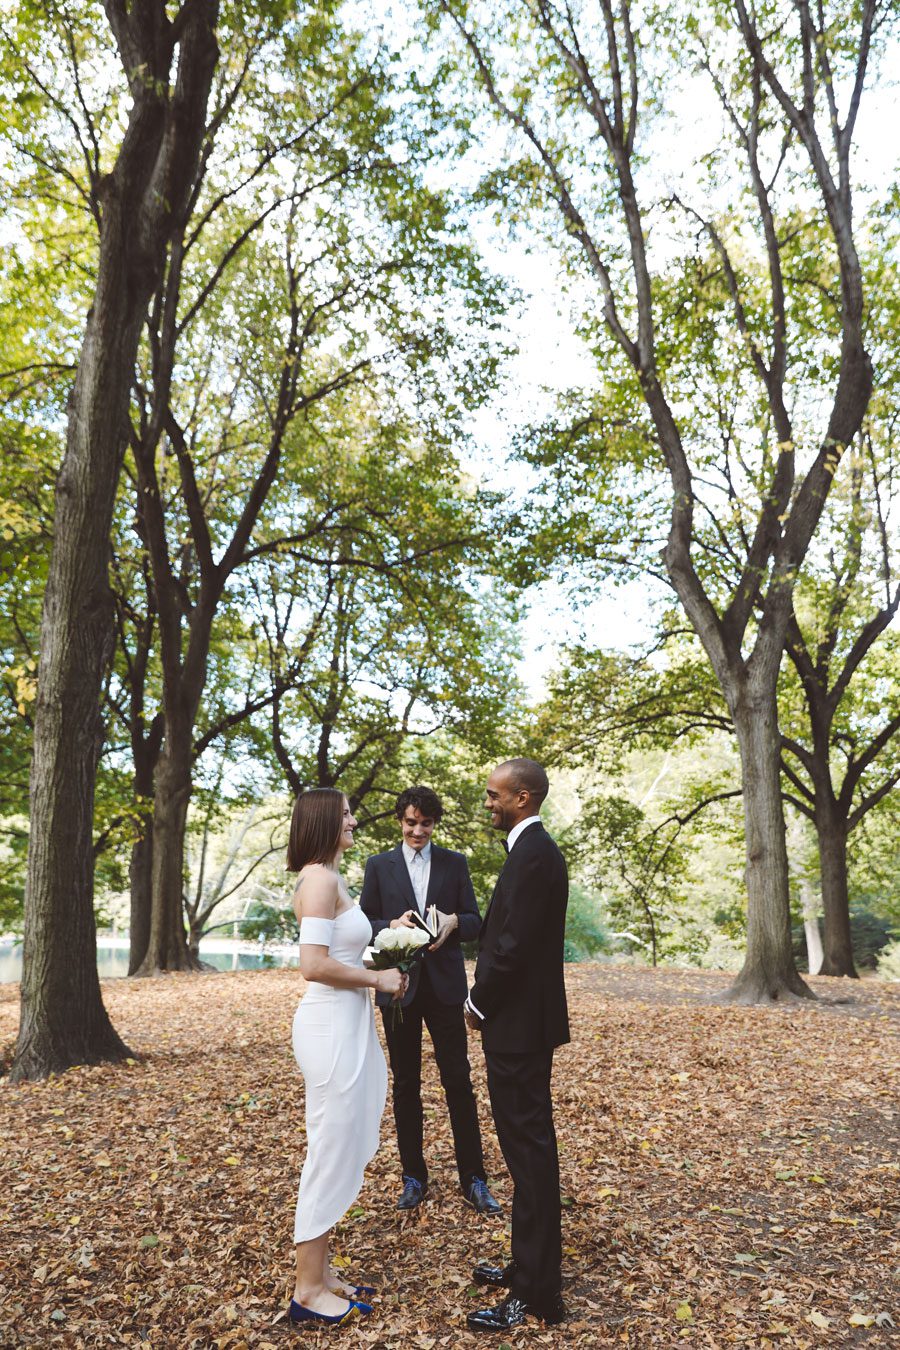 central park wedding officiant